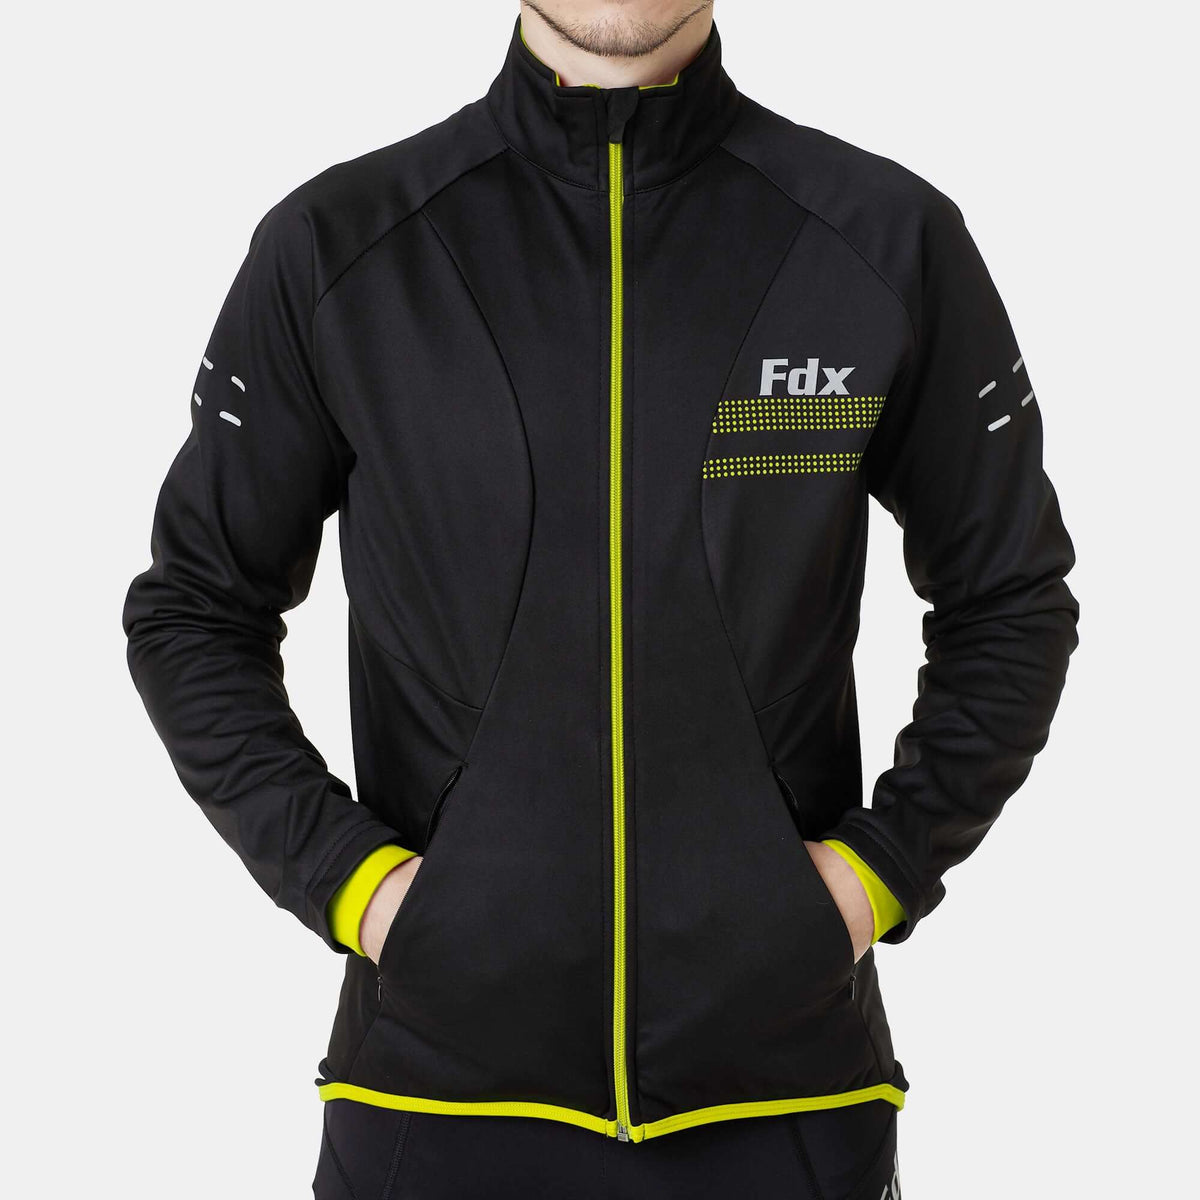 Fdx Arch Men's Fluorescent Yellow Windproof & Water Resistant